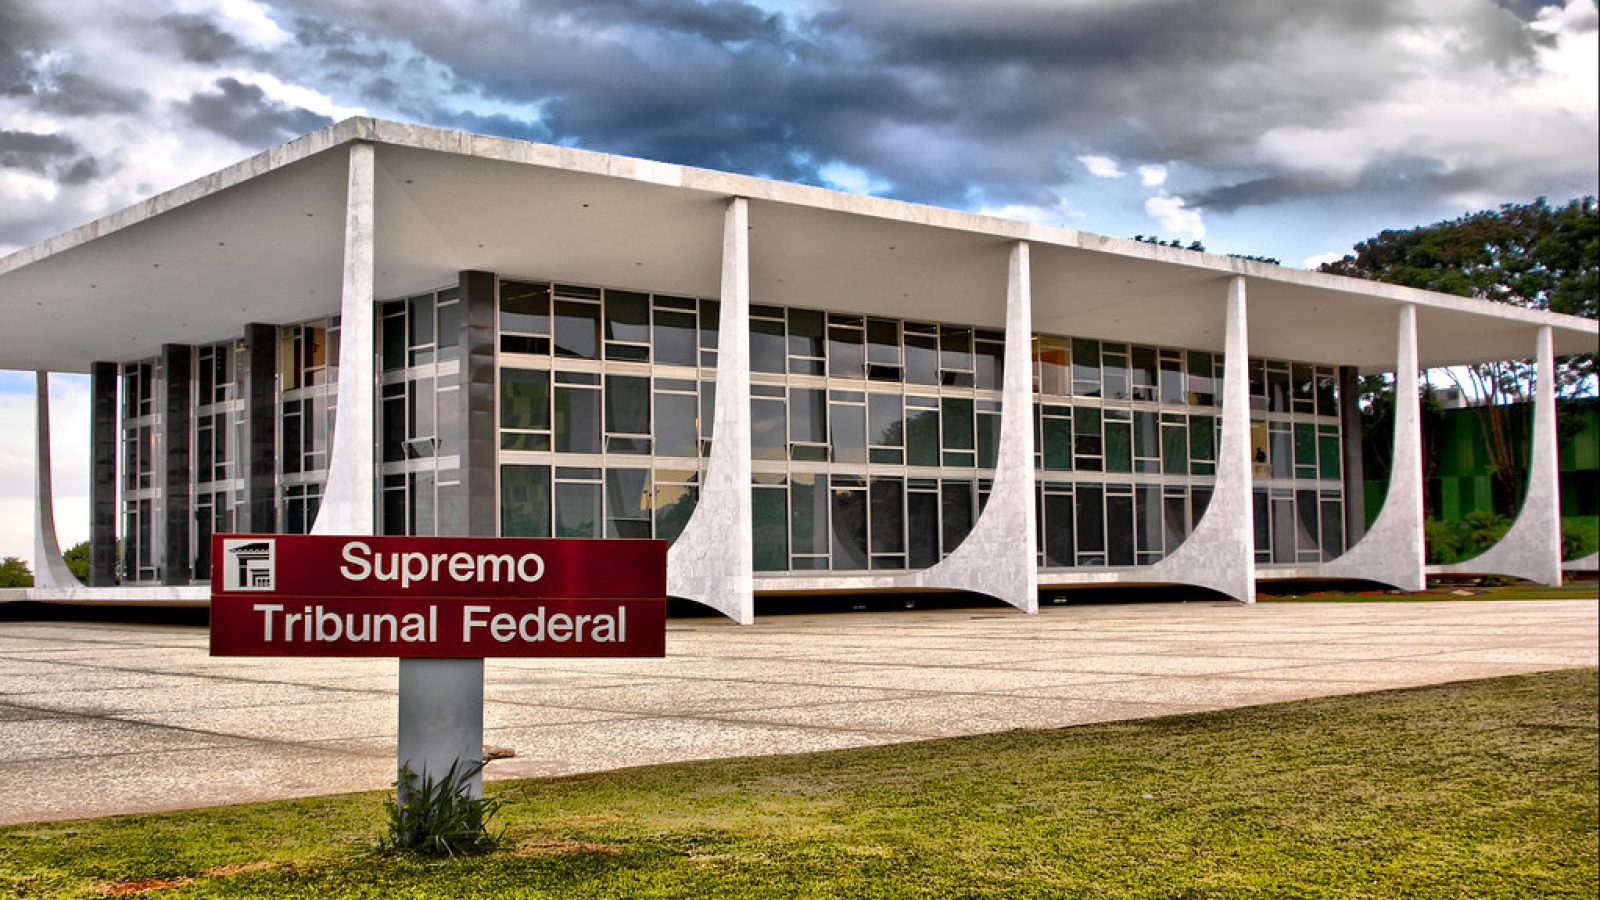 Brazilian Supreme Court building